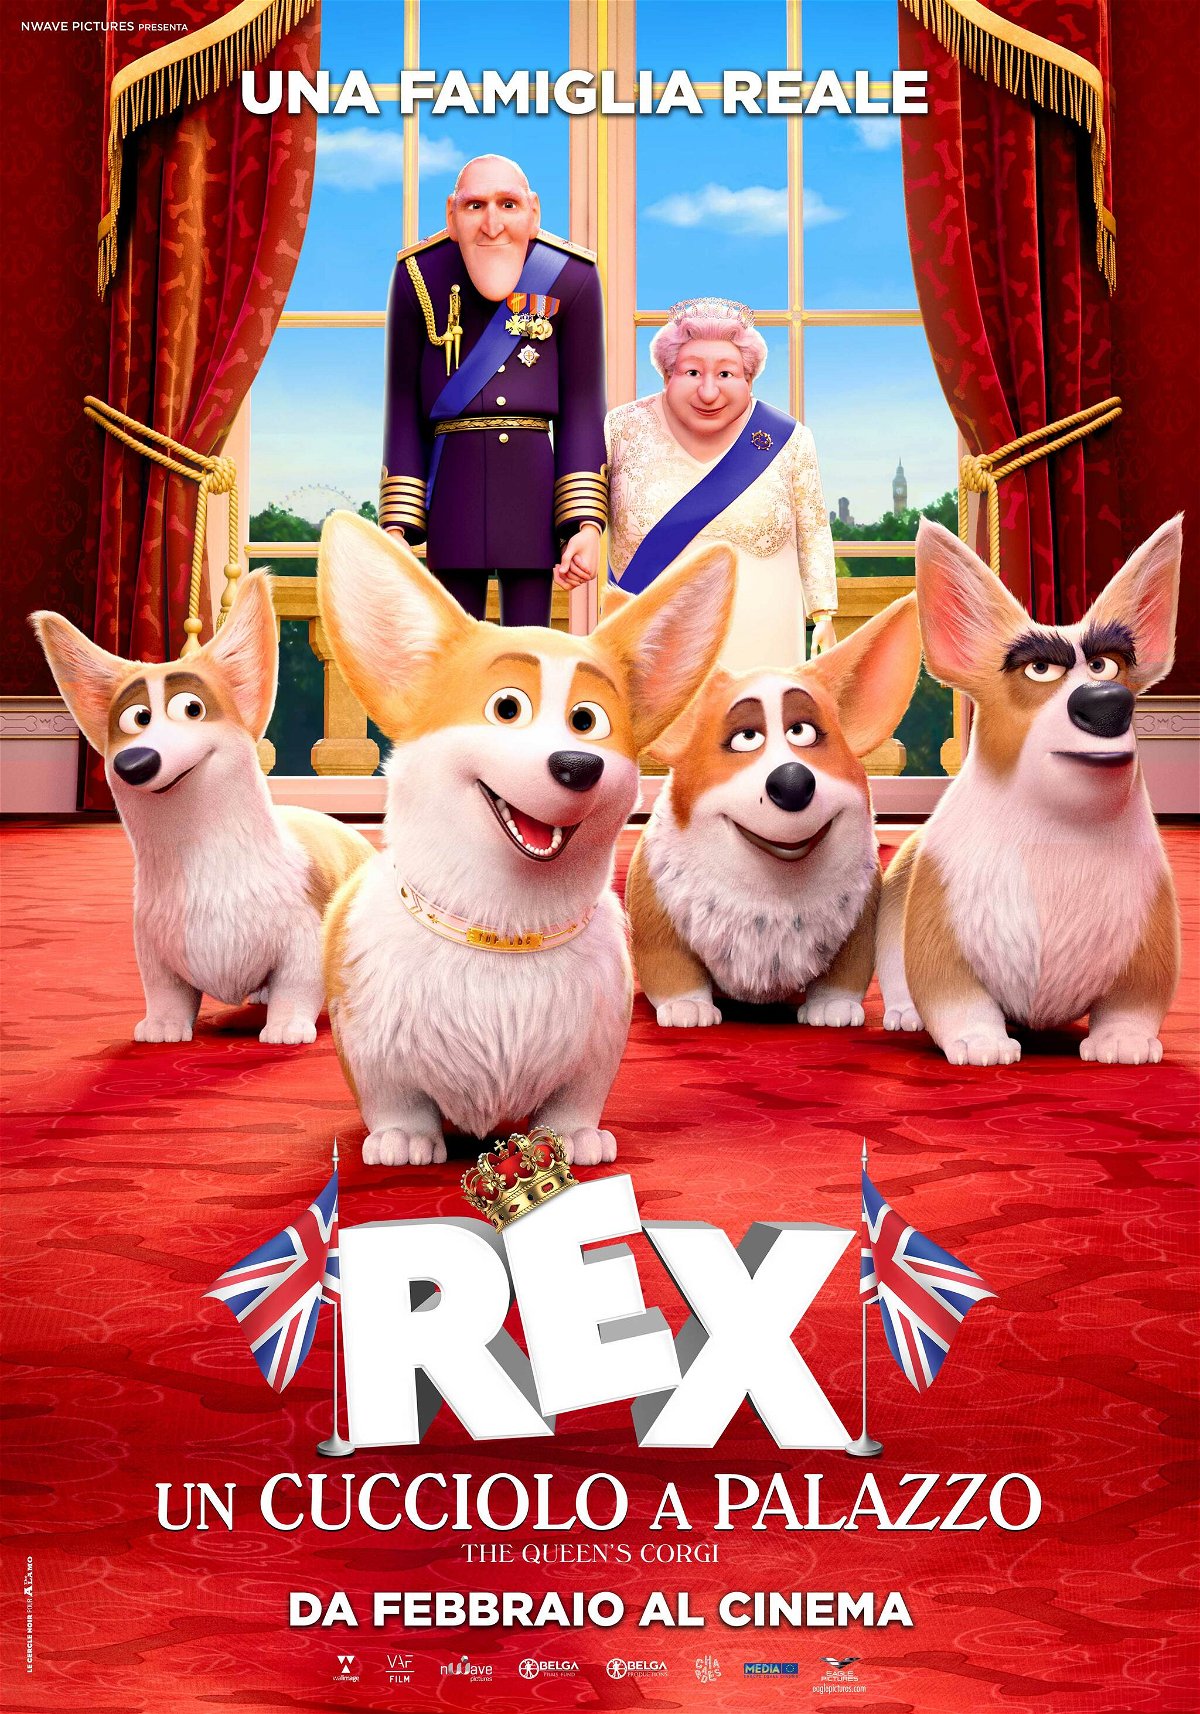 REX - Un cucciolo a palazzo, character poster